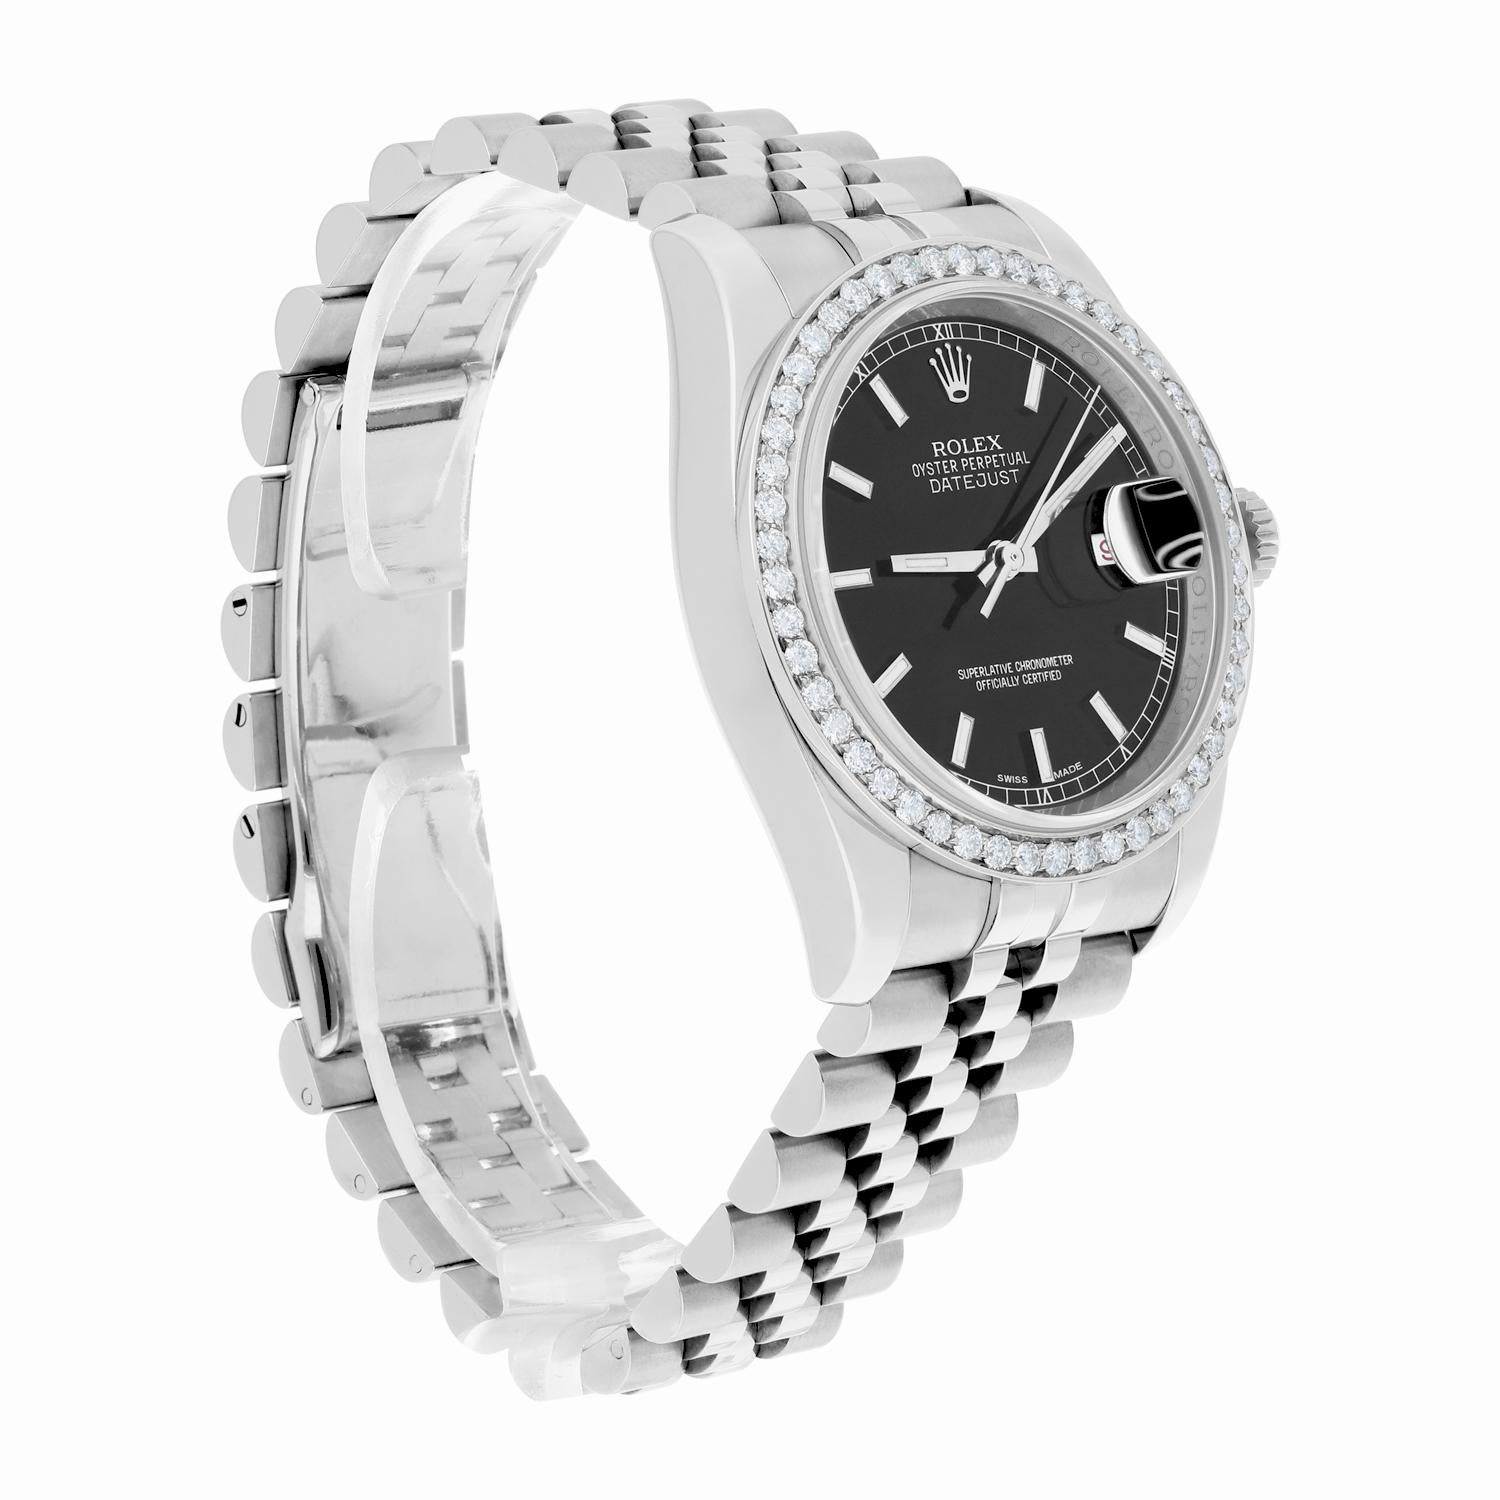 Rolex Datejust 36 Steel Watch Diamond Bezel Black Index Dial Jubilee Band 116234 For Sale 1